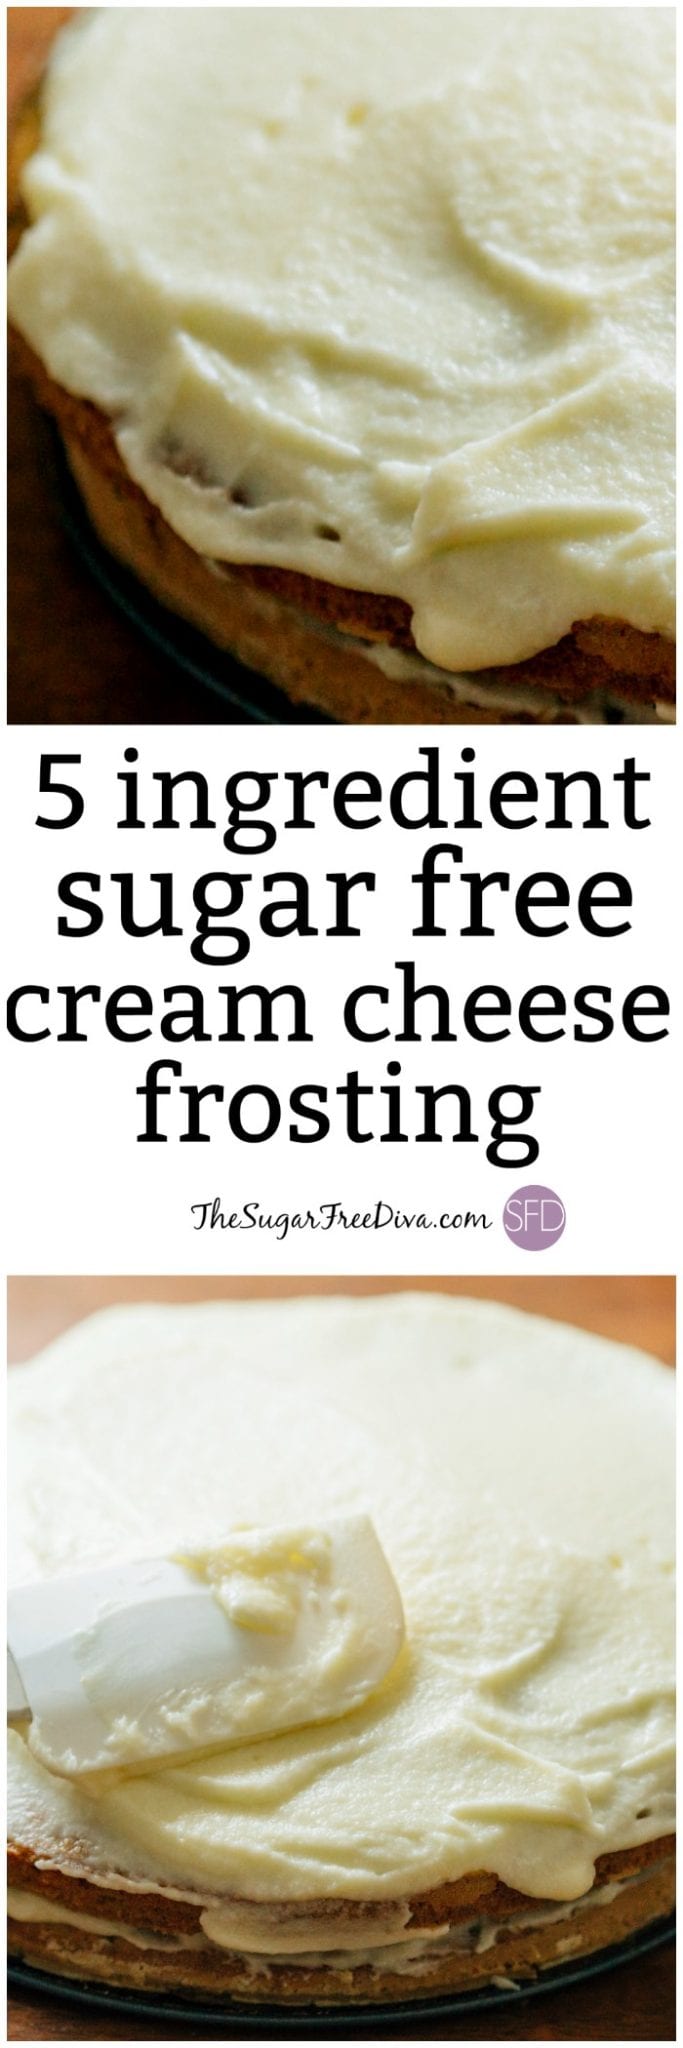 5 Ingredient Sugar Free Cream Cheese Frosting